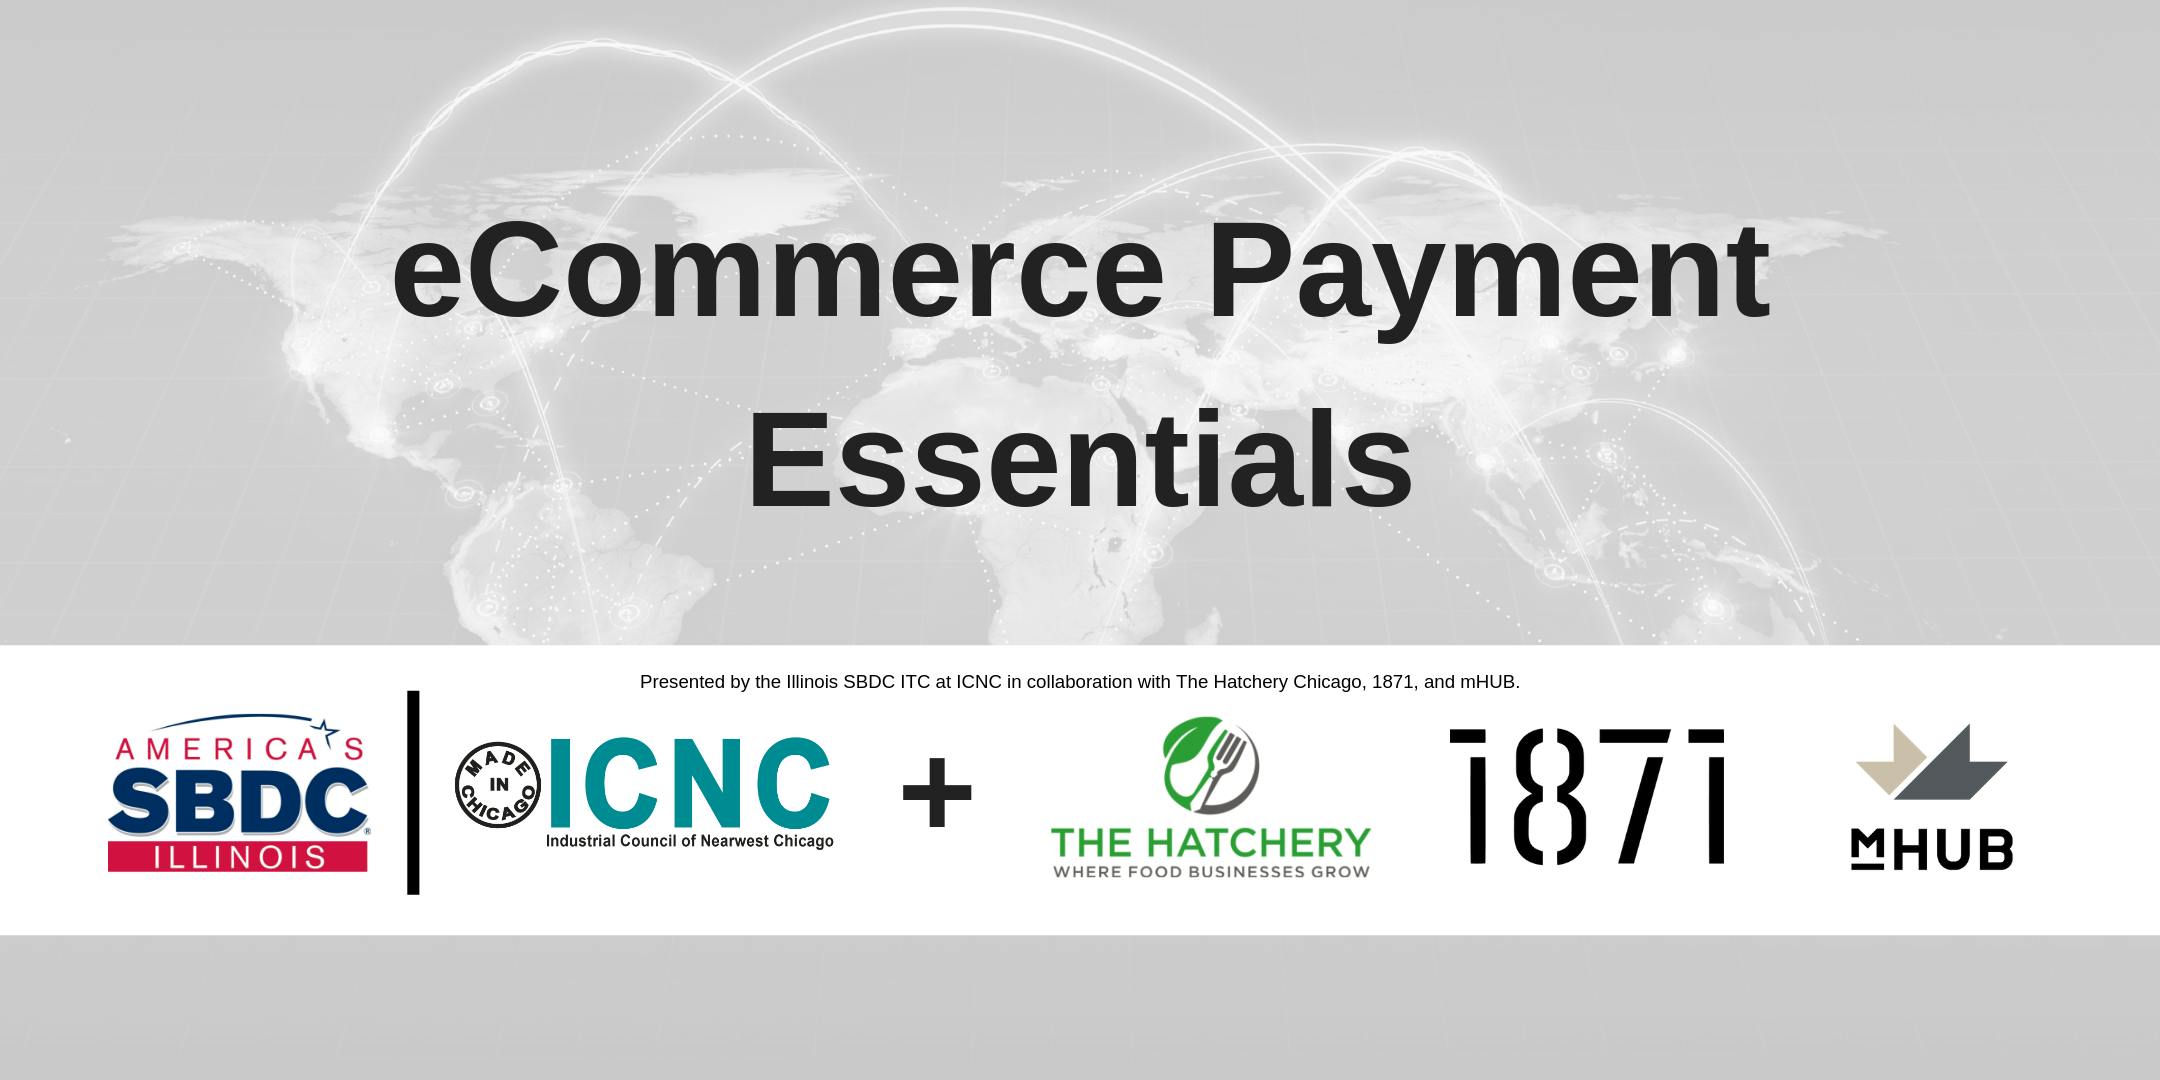 eCommerce Payment Essentials